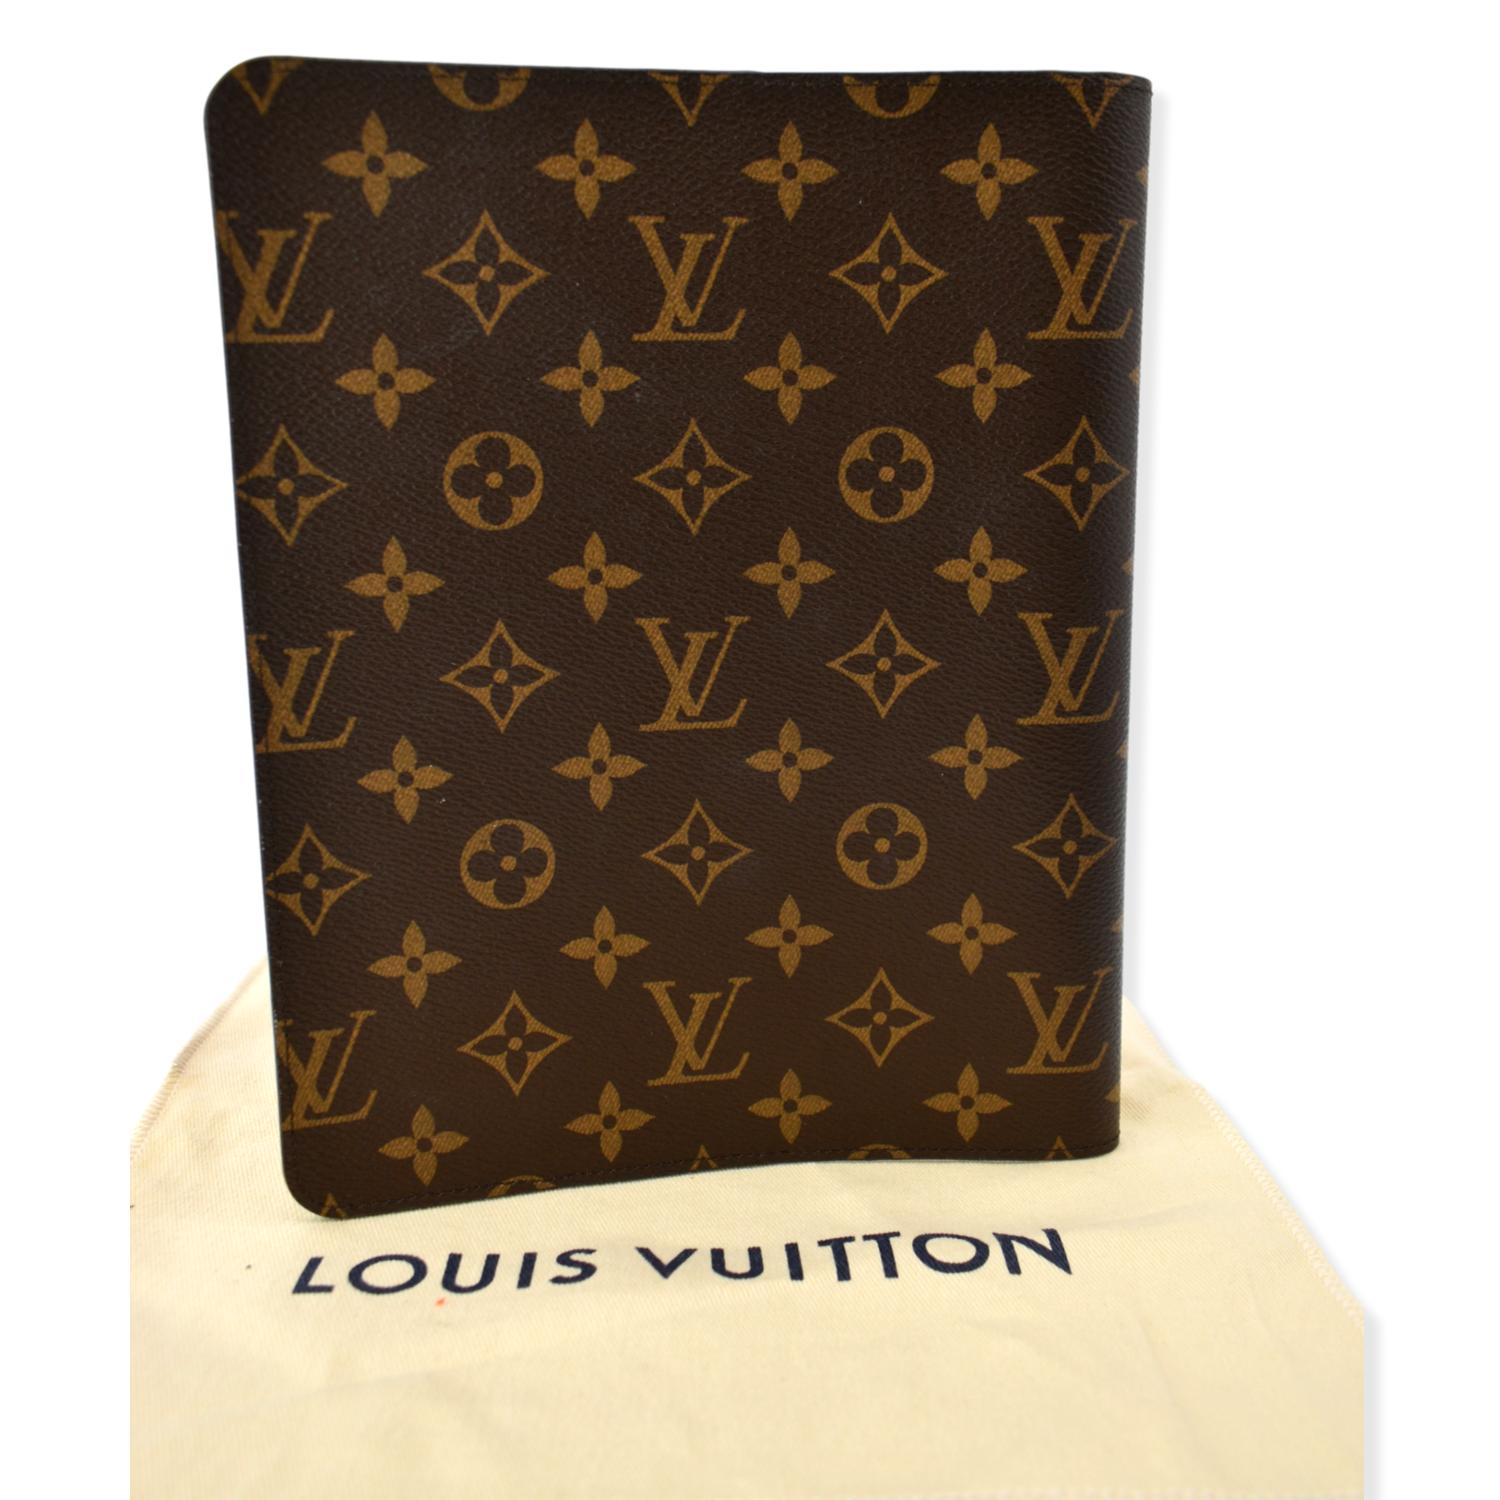 The Louis Vuitton Authentication Workbook